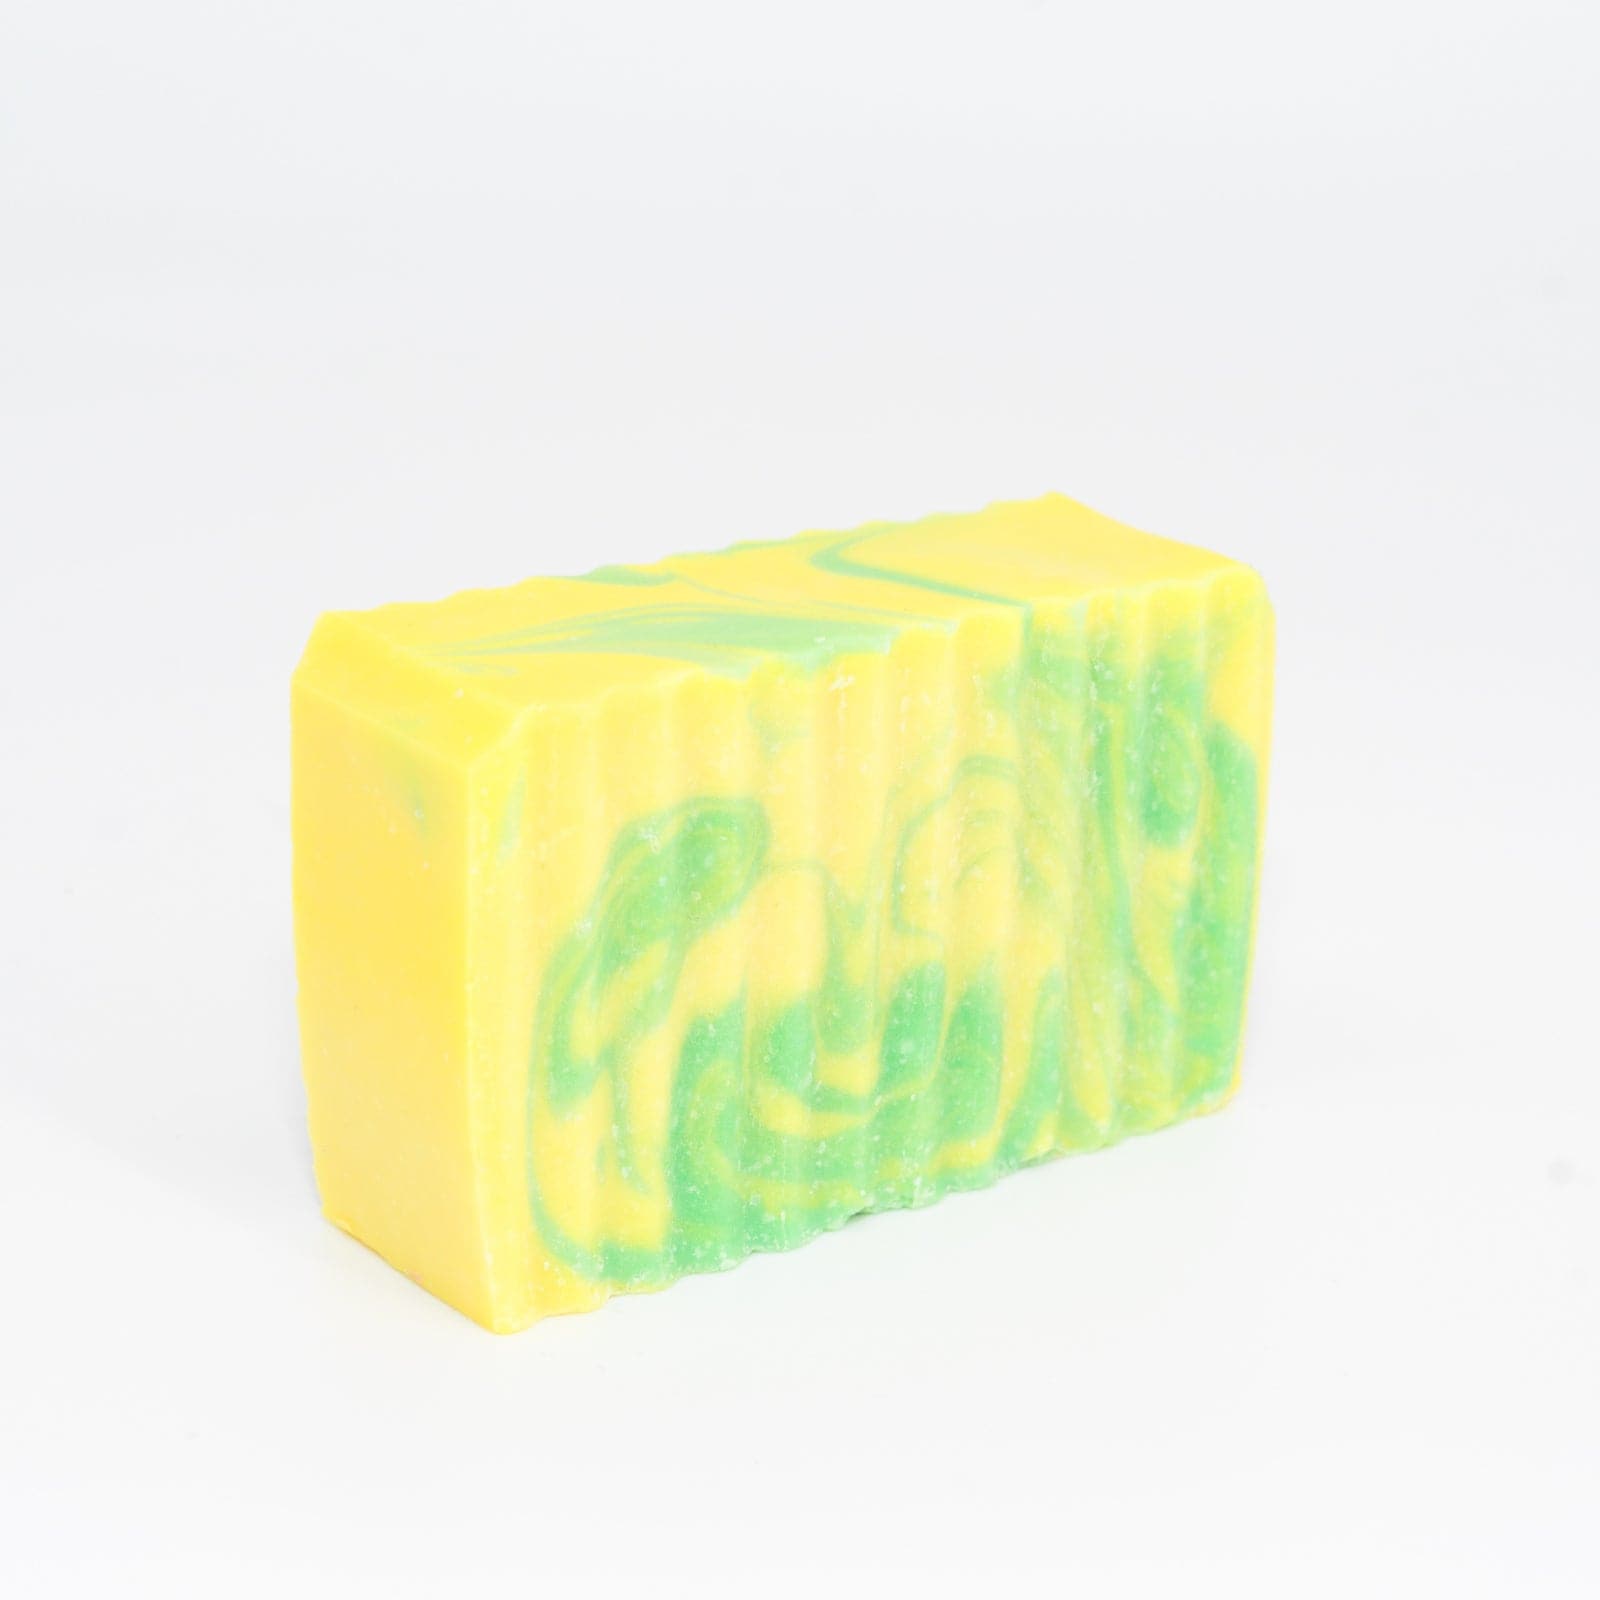 A bar of yellow and green colored Buff City Soap's lemongrass + eucalyptus soap